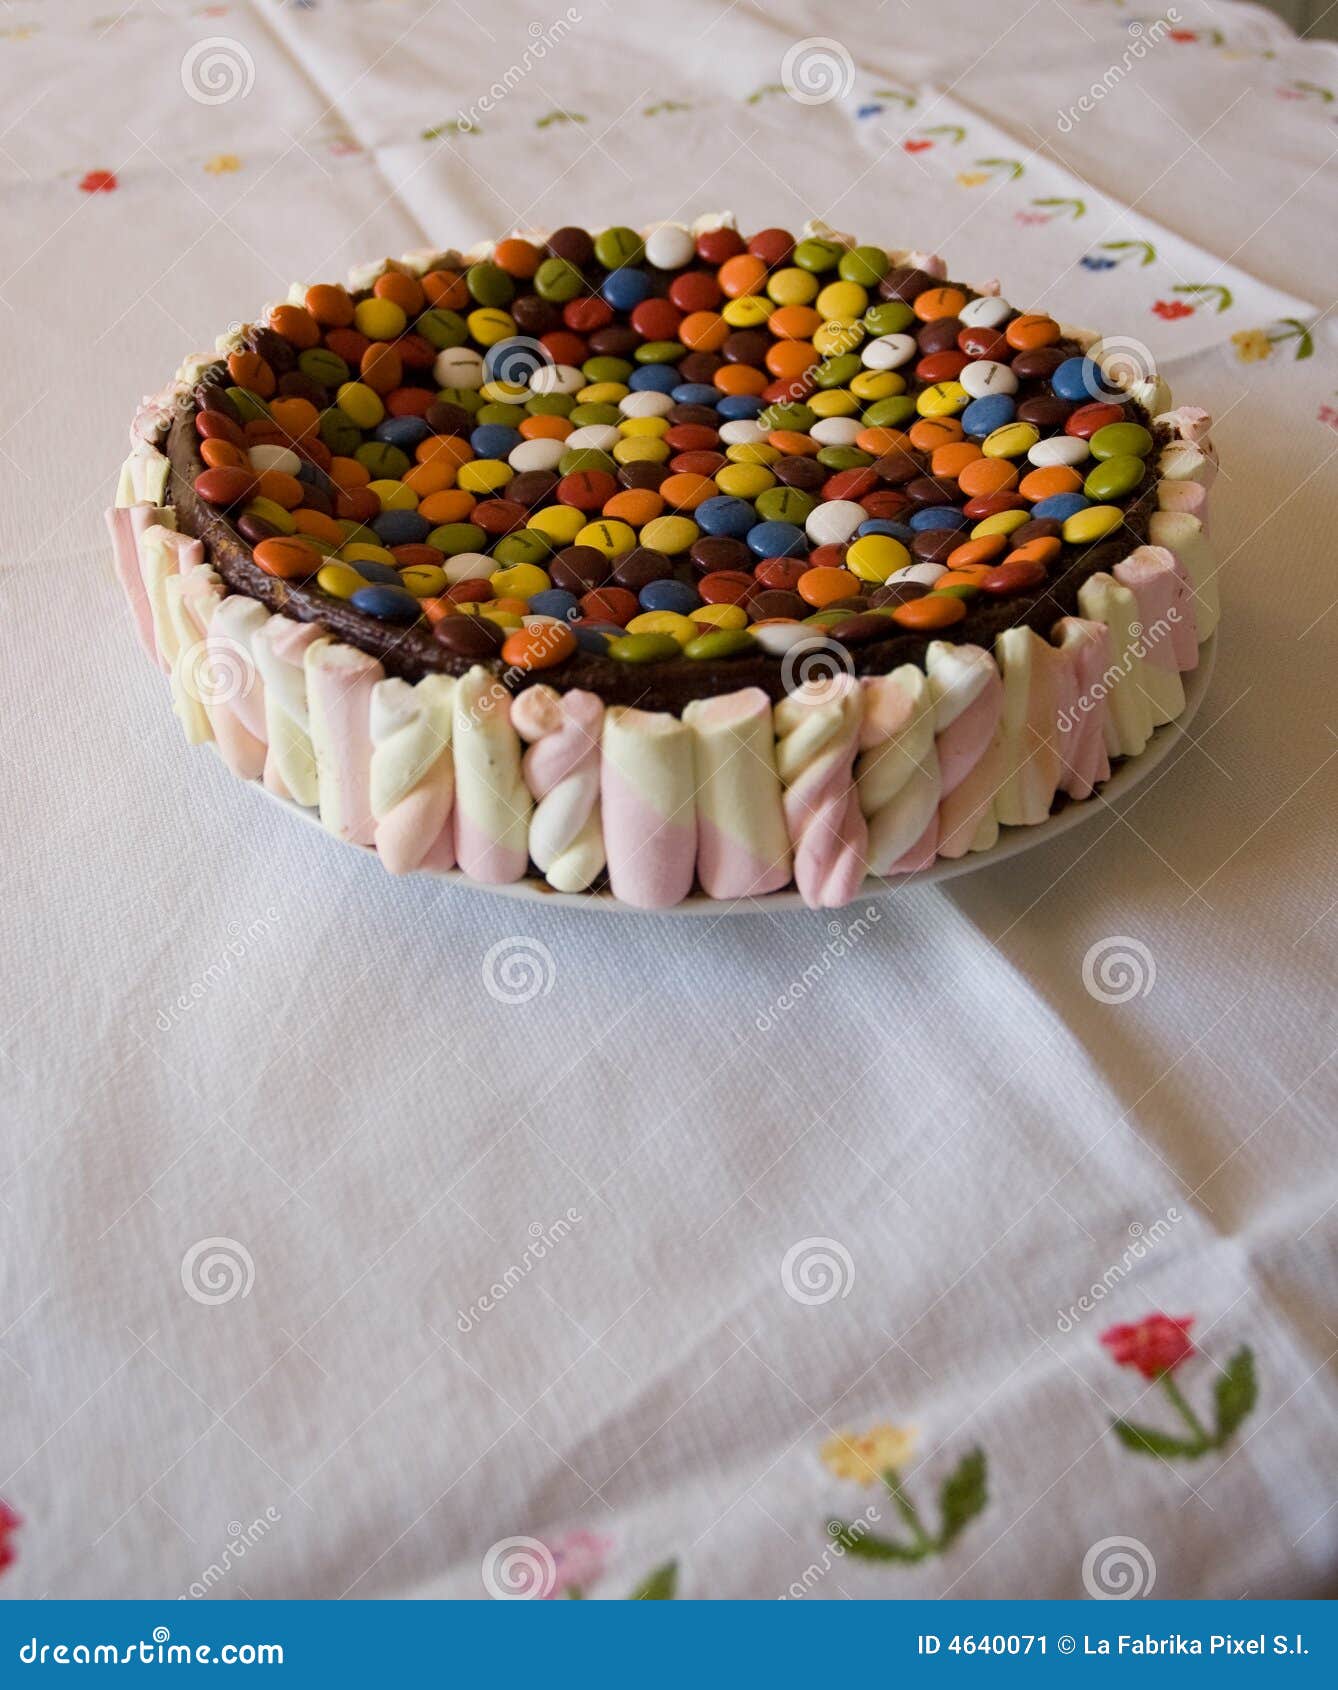 M&M Candy Cake | Bunsen Burner Bakery